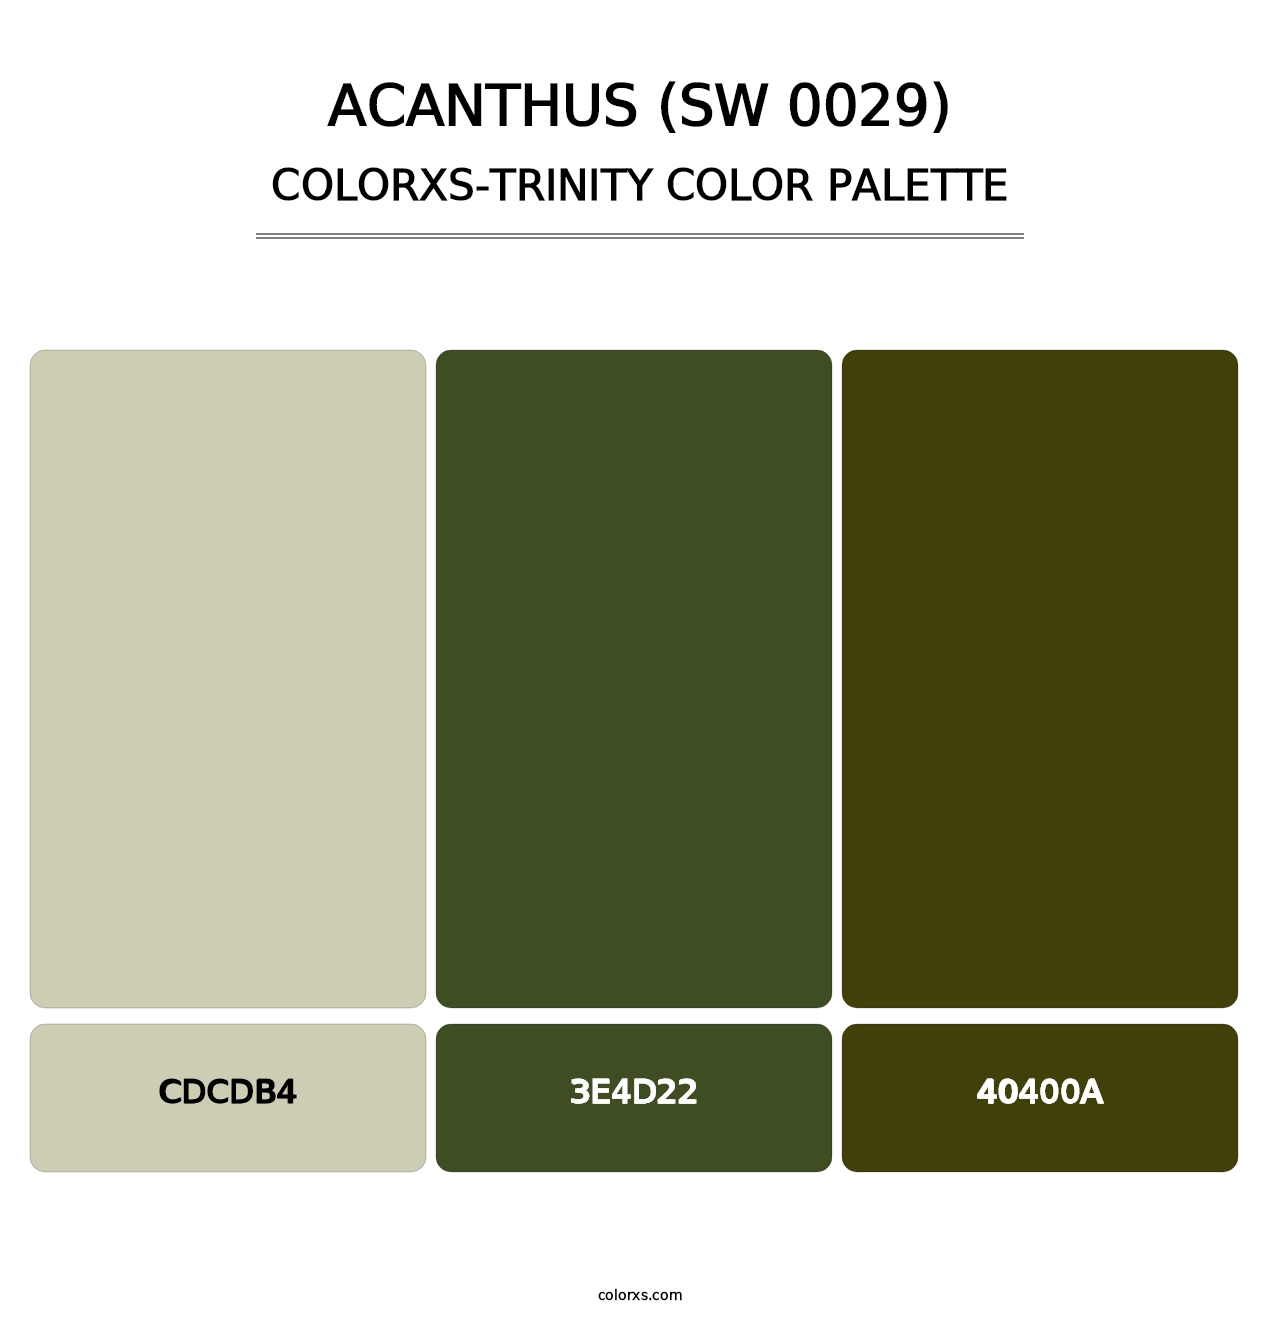 Acanthus (SW 0029) - Colorxs Trinity Palette